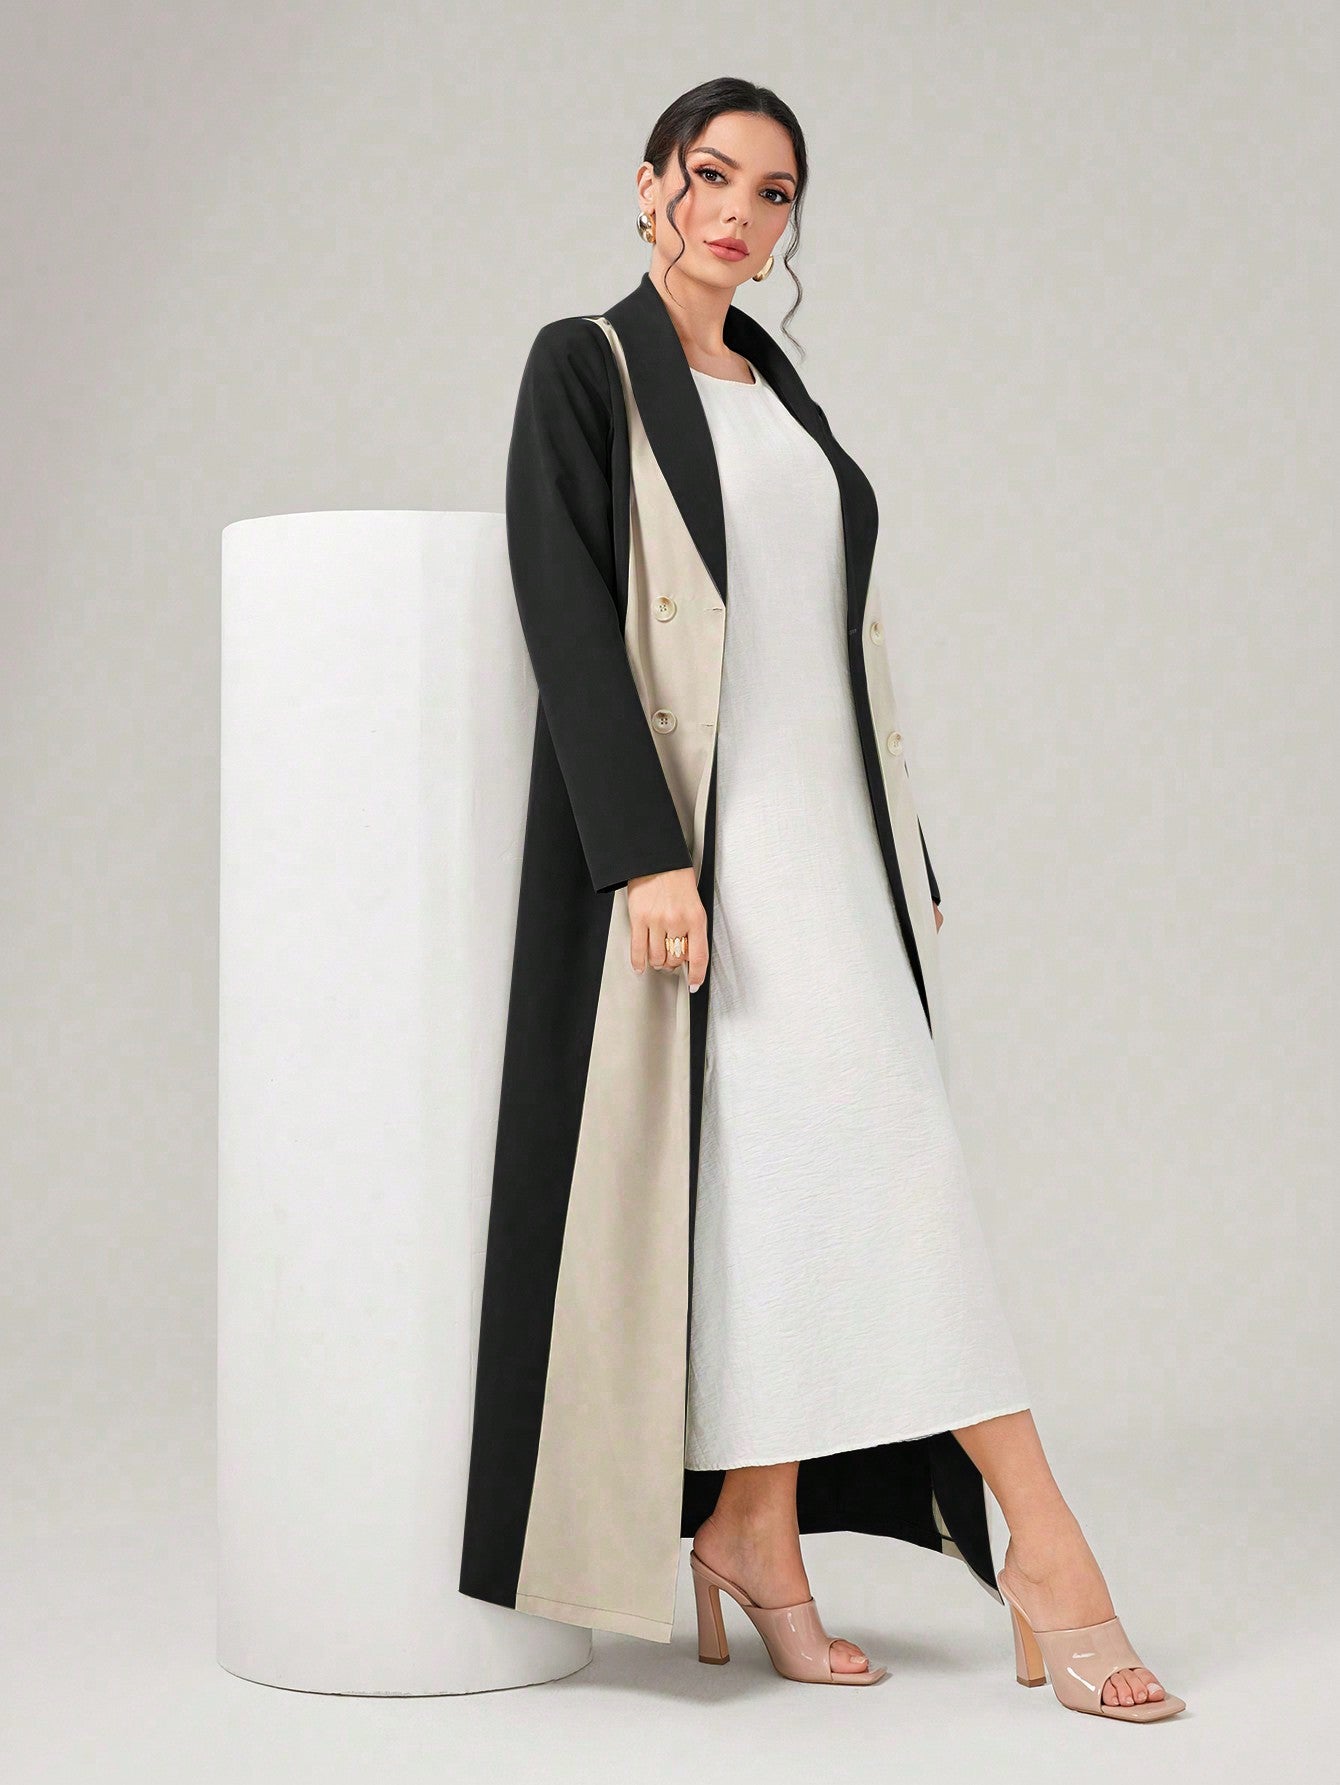 Najma Women'S Contrast Color Abaya With Shawl Collar, Style Robe